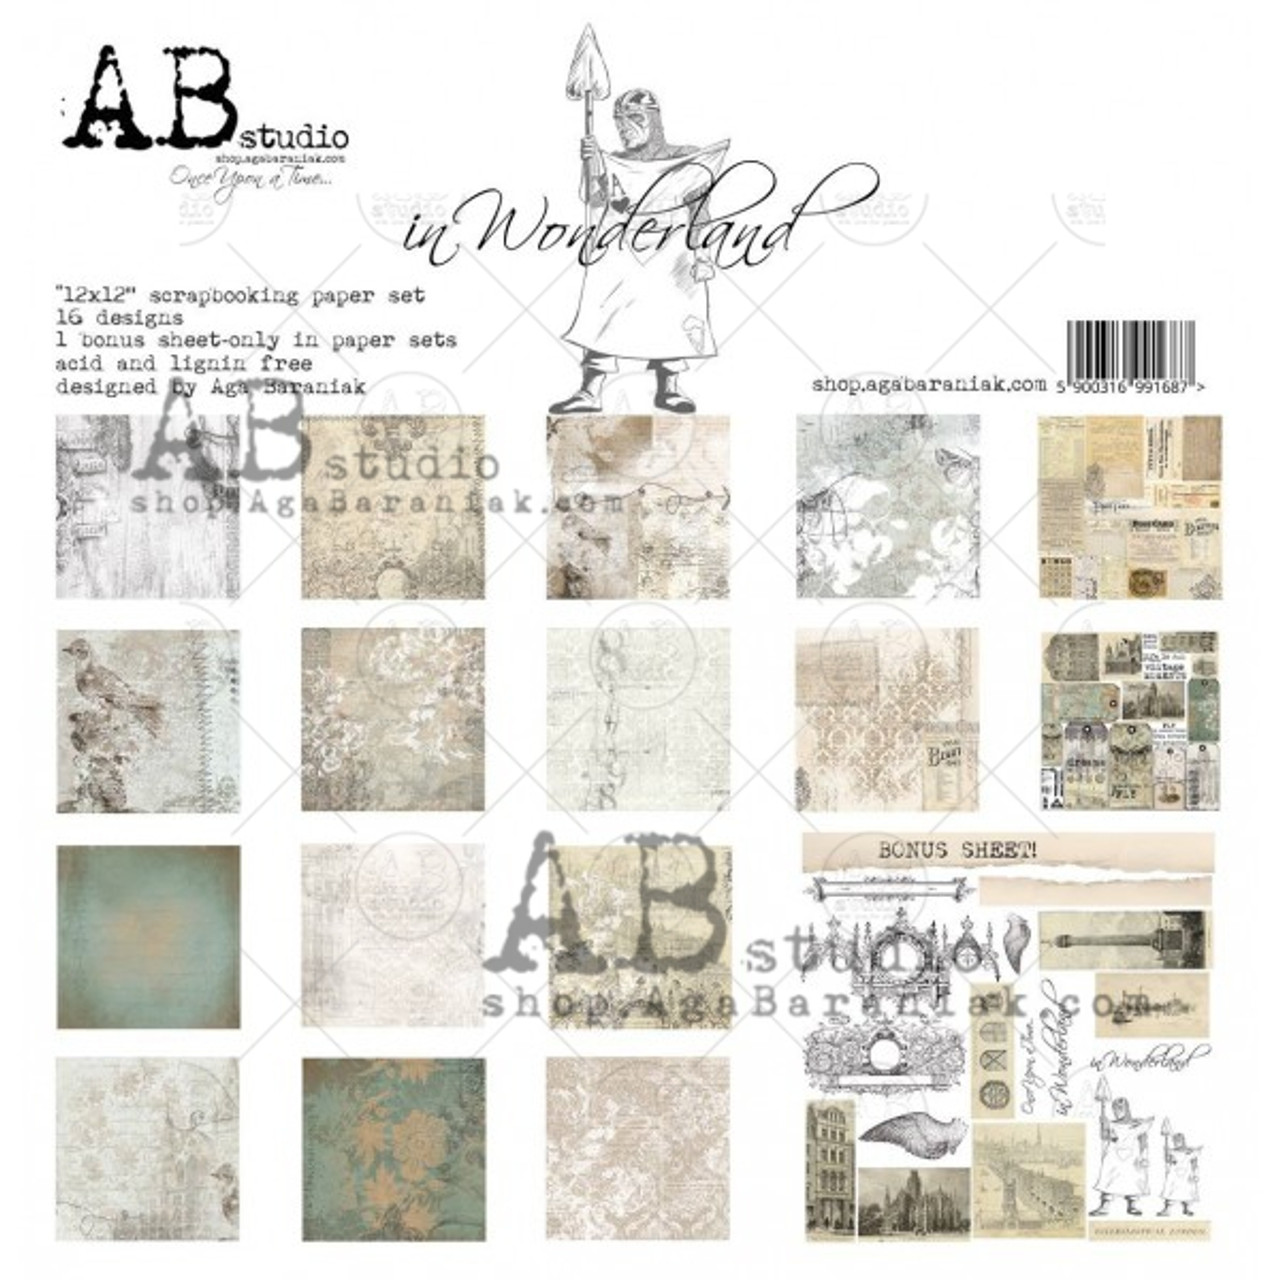 AB Studios Follow the Rabbit 8 Pgs 12x12 Scrapbook Paper Set - TH Decor